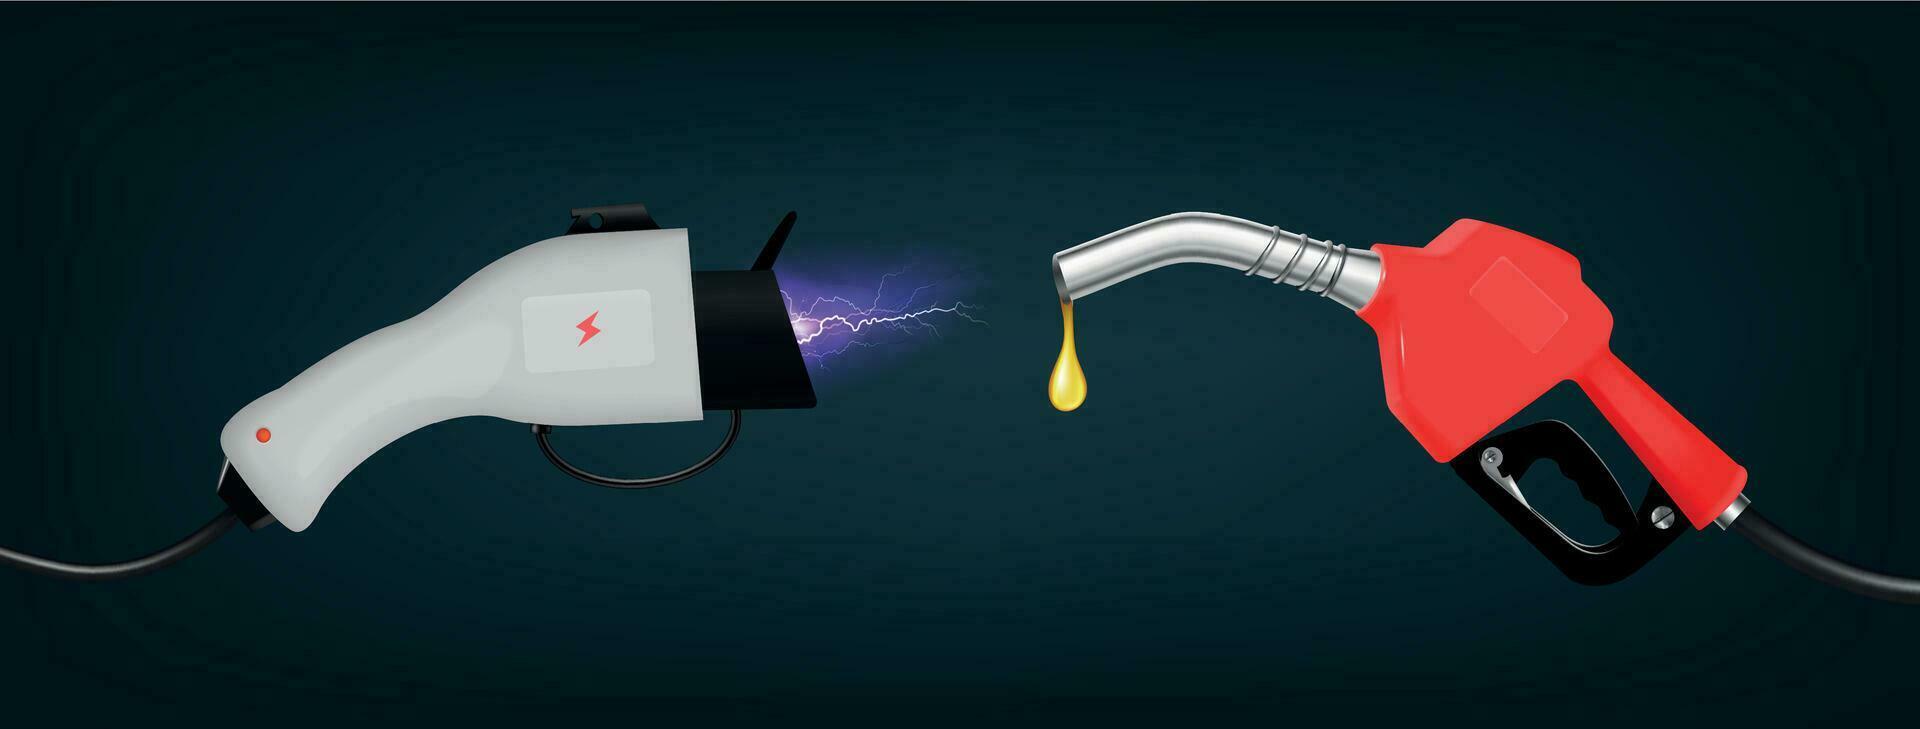 Eco Fuel Realistic Illustration vector